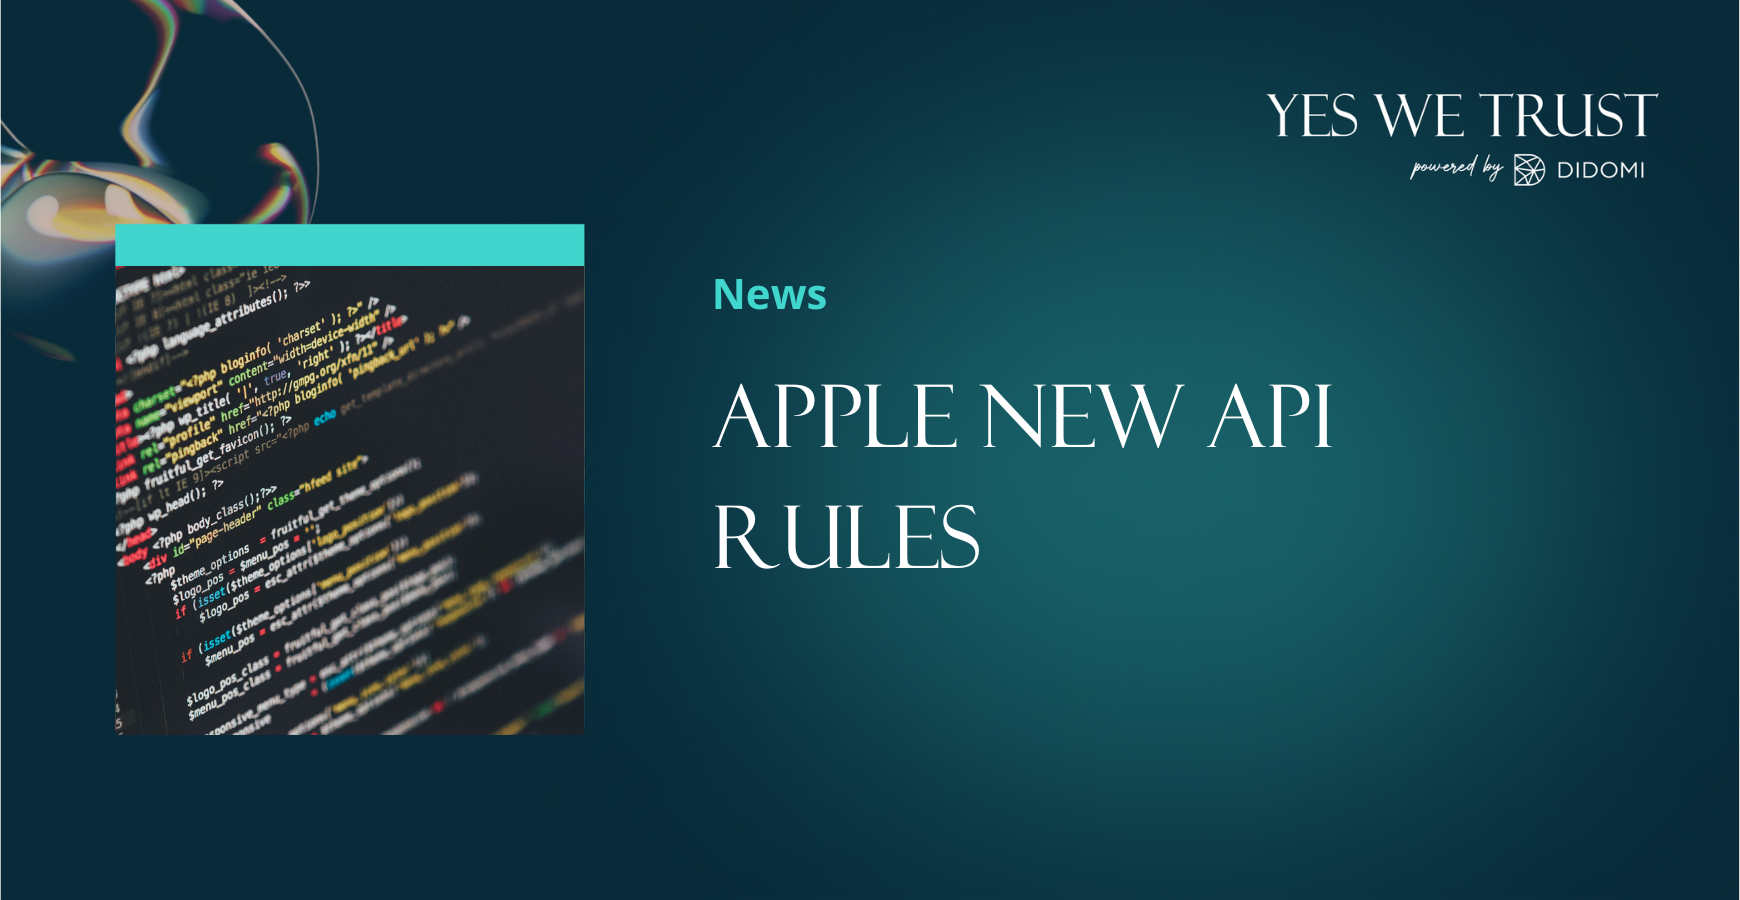 Apple new api rules